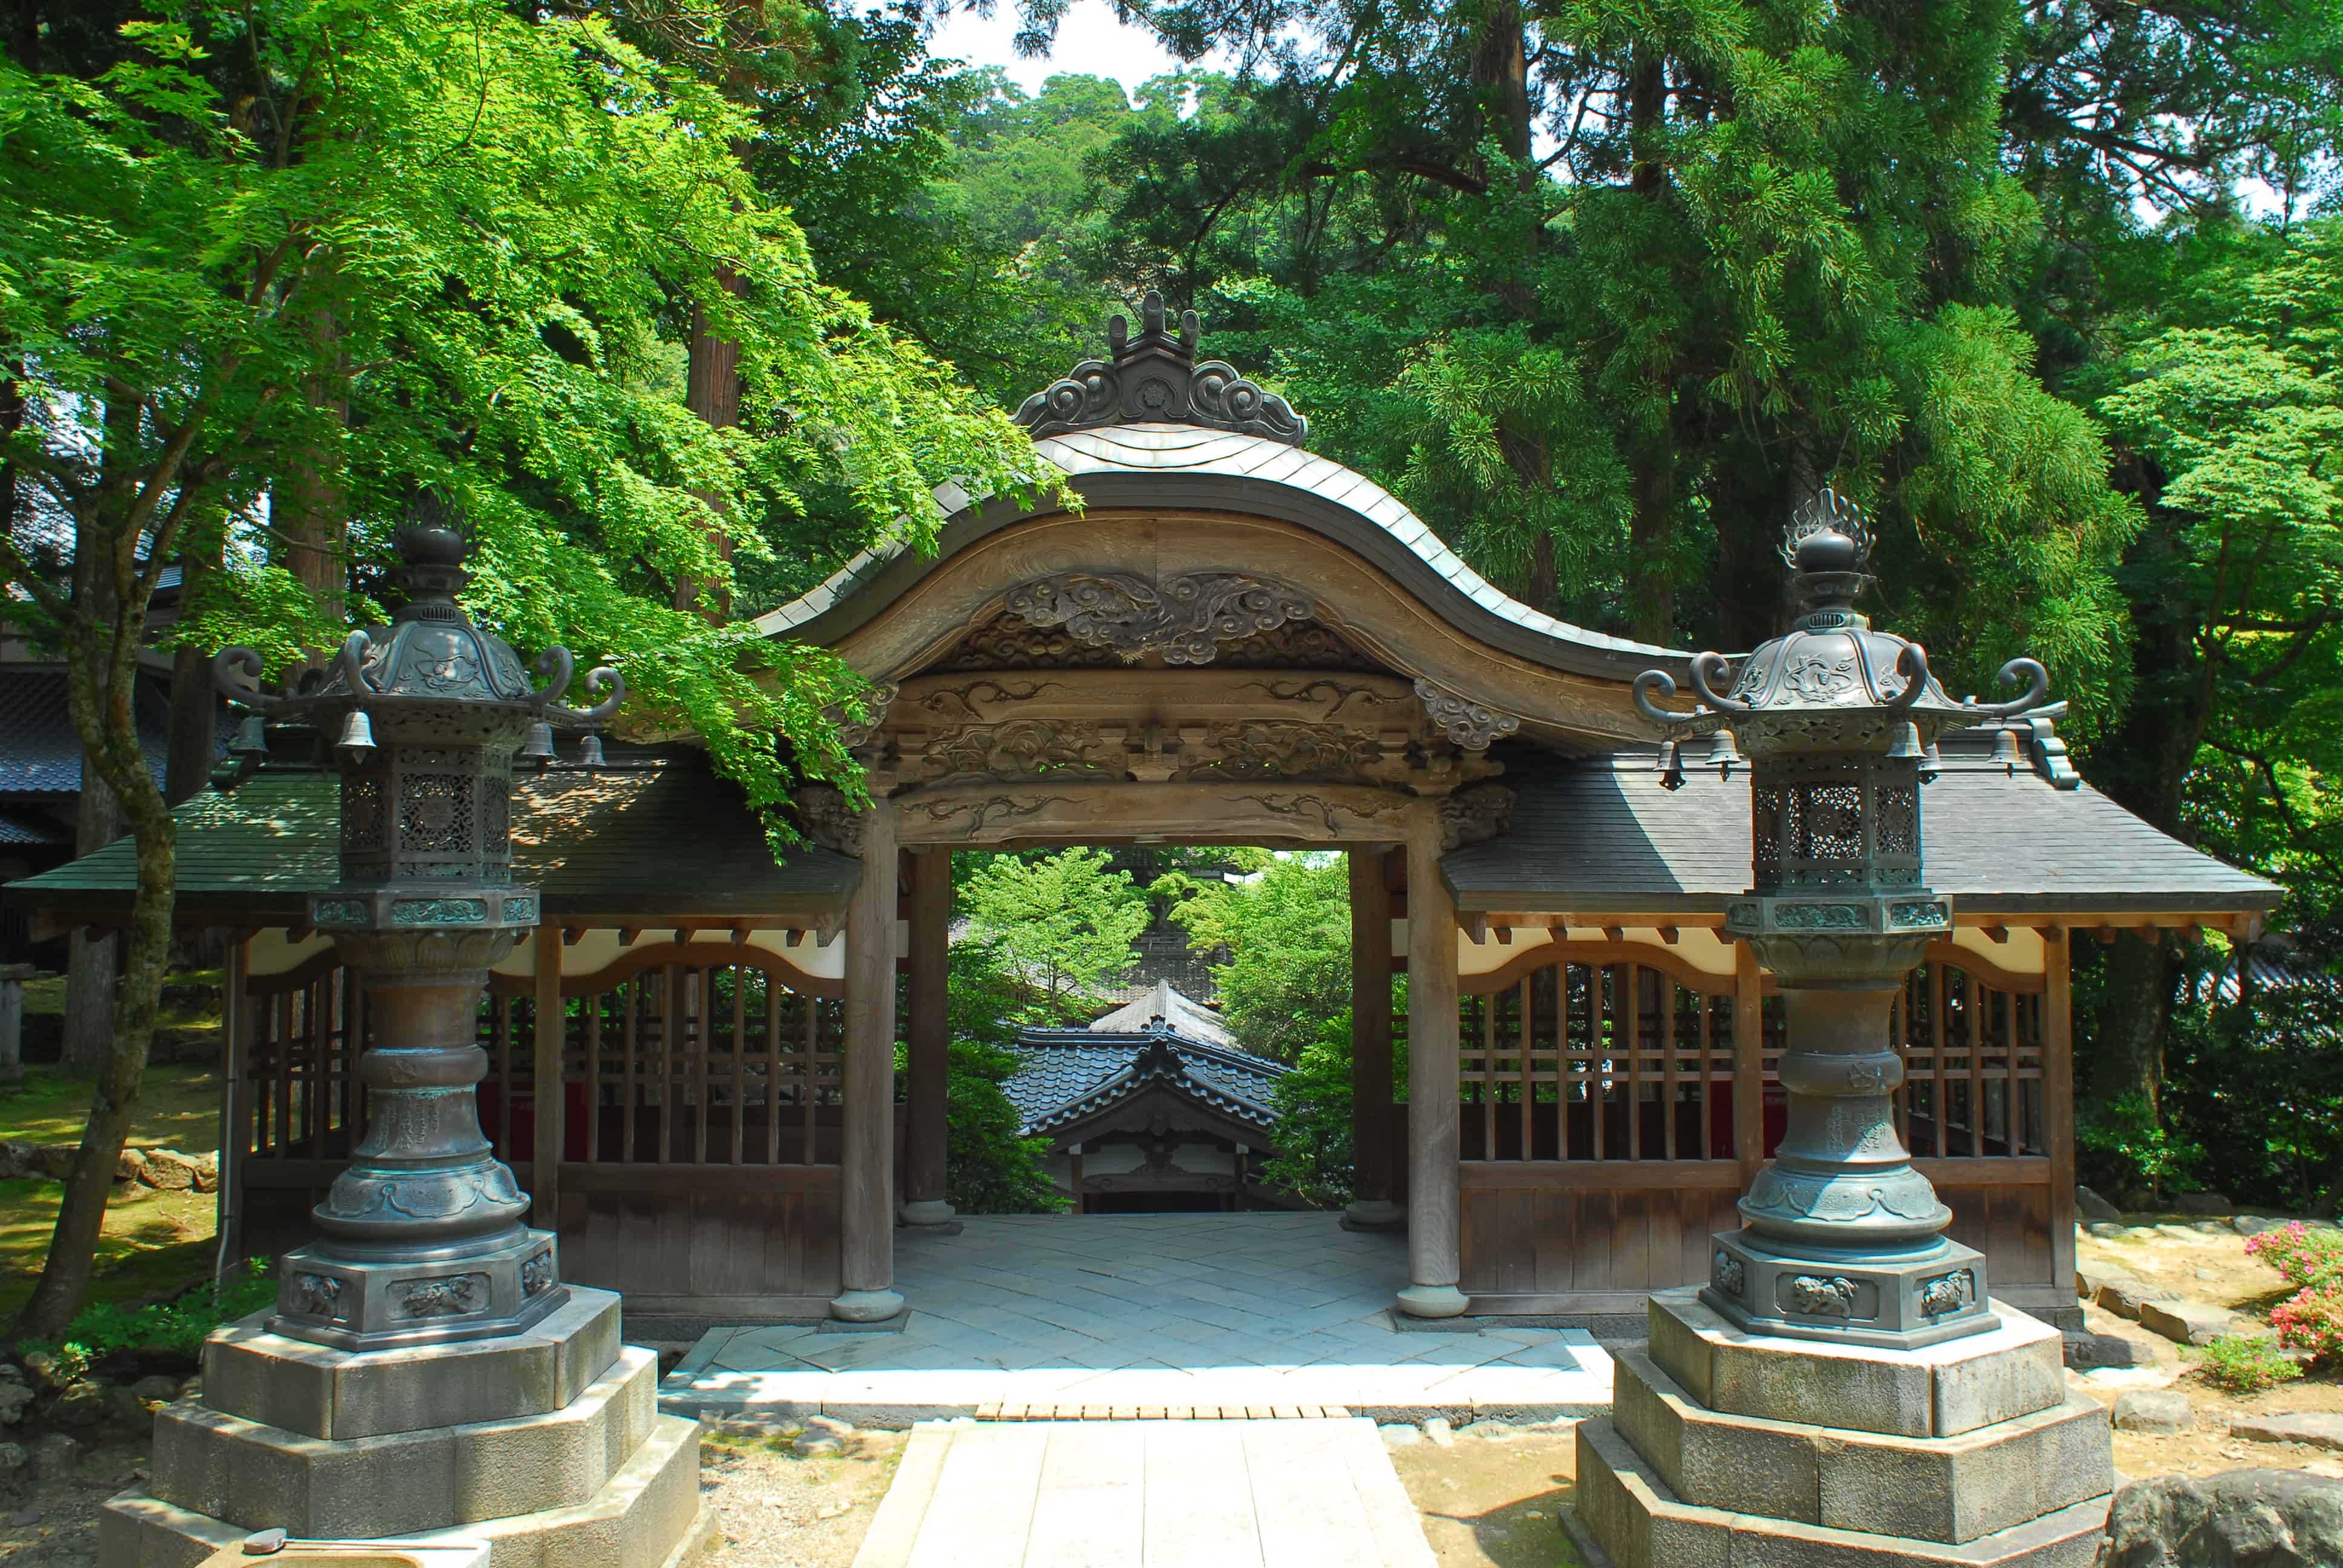 Buddhist temple gate amid lush greenery.